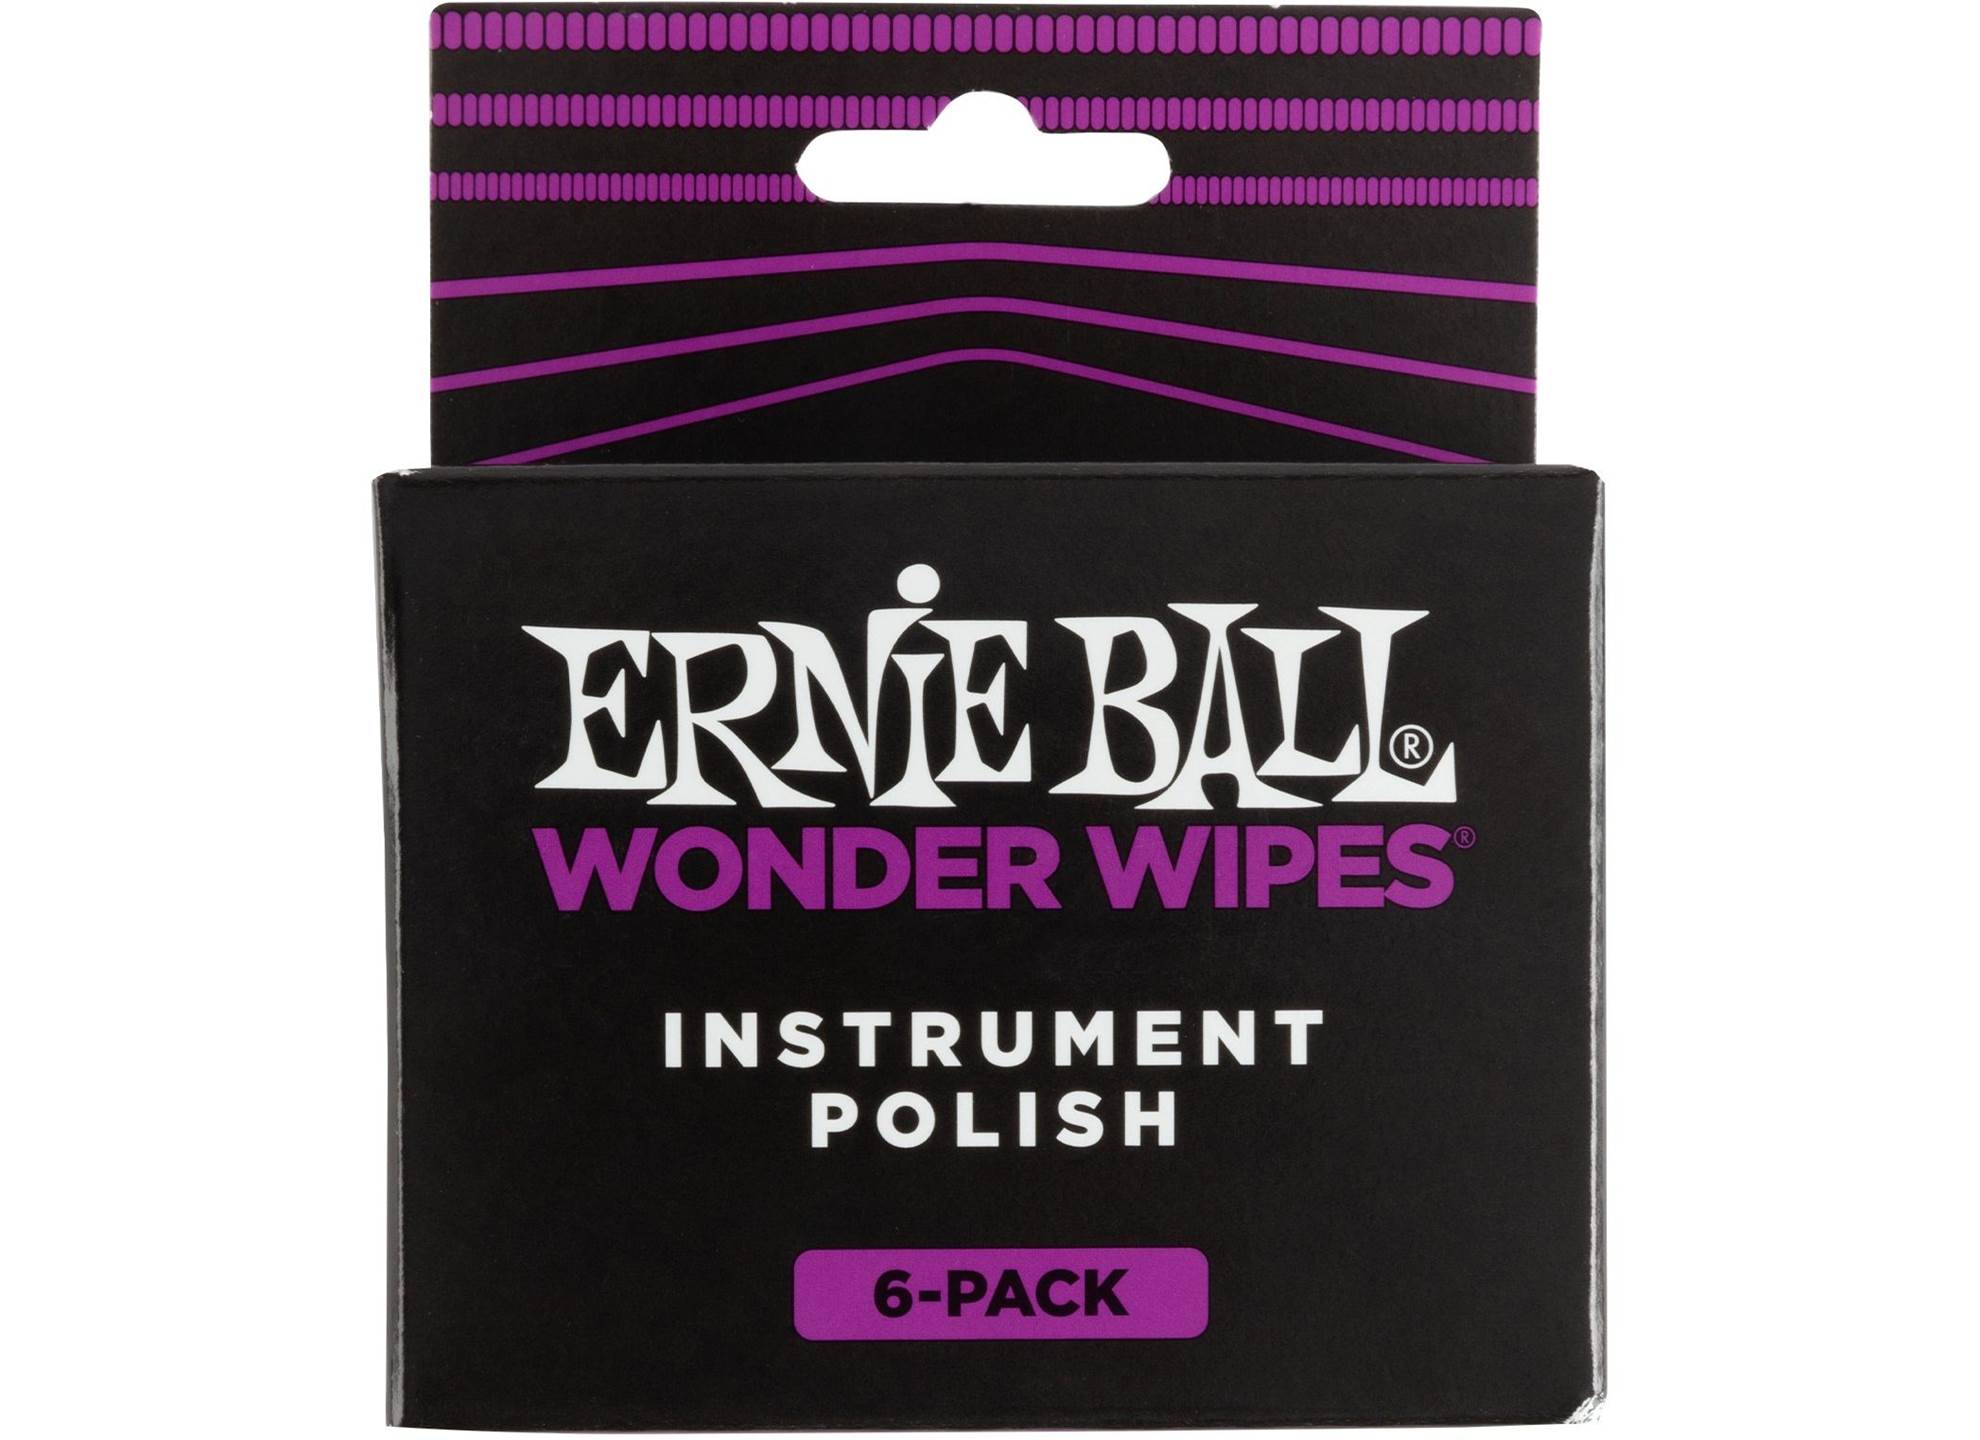 EB-4278 Wonder Wipes Polish 6-pack